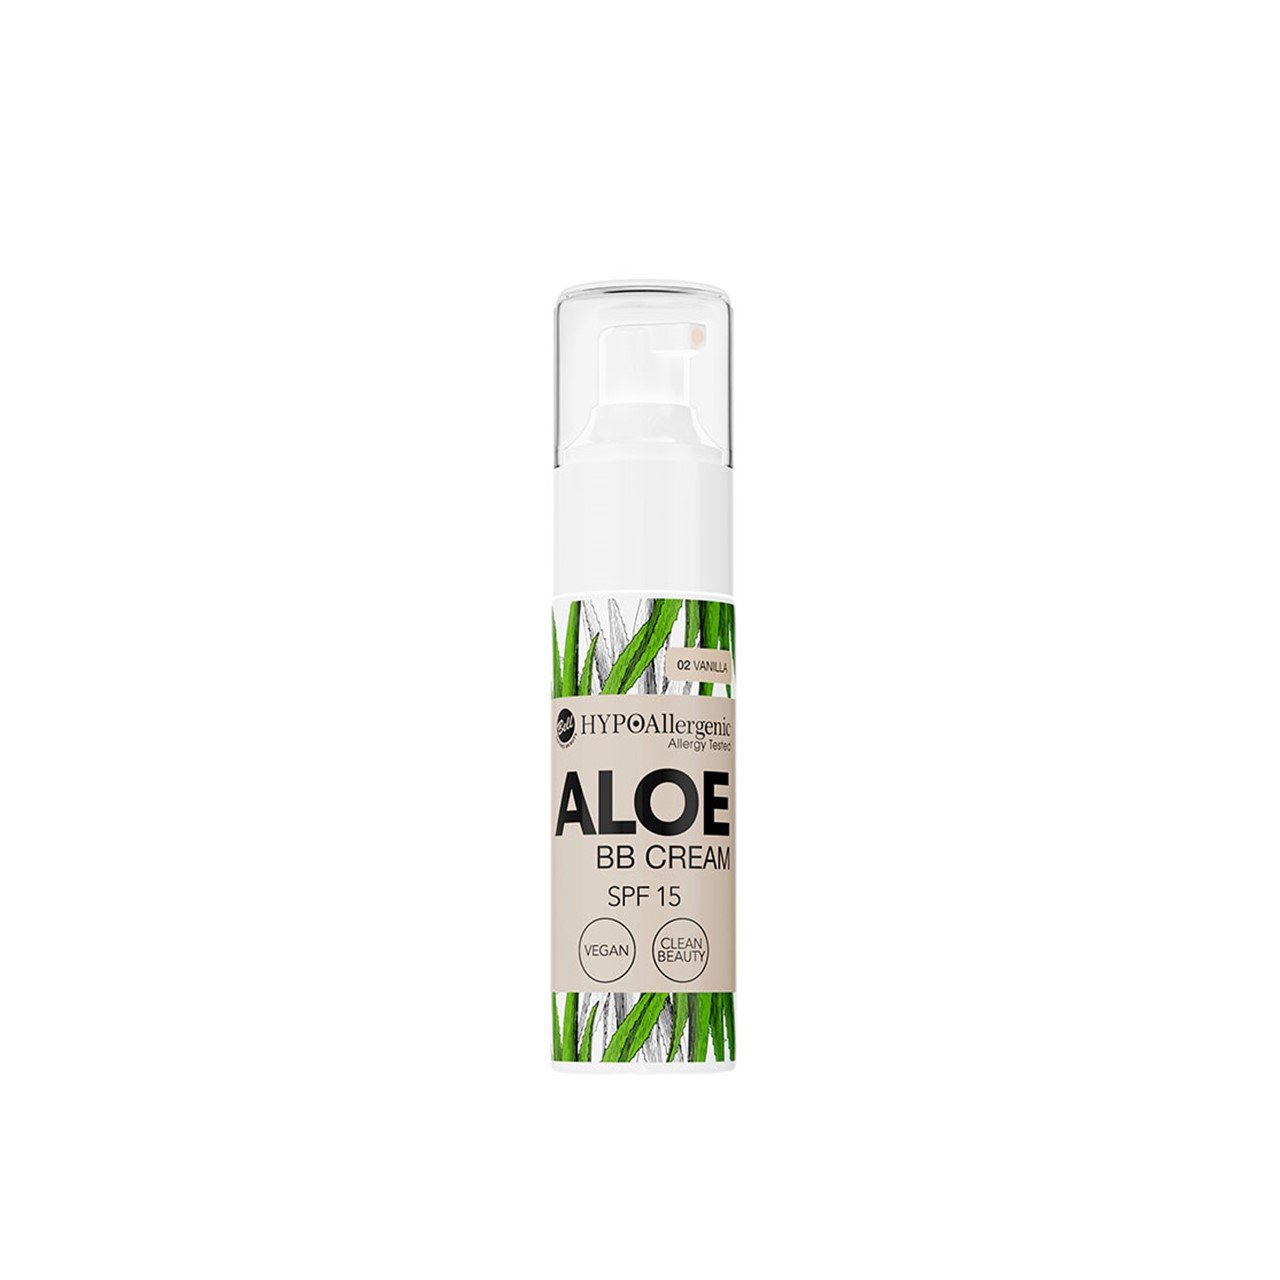 Bell HYPOAllergenic Aloe BB Cream SPF15 02 Vanilla 20g